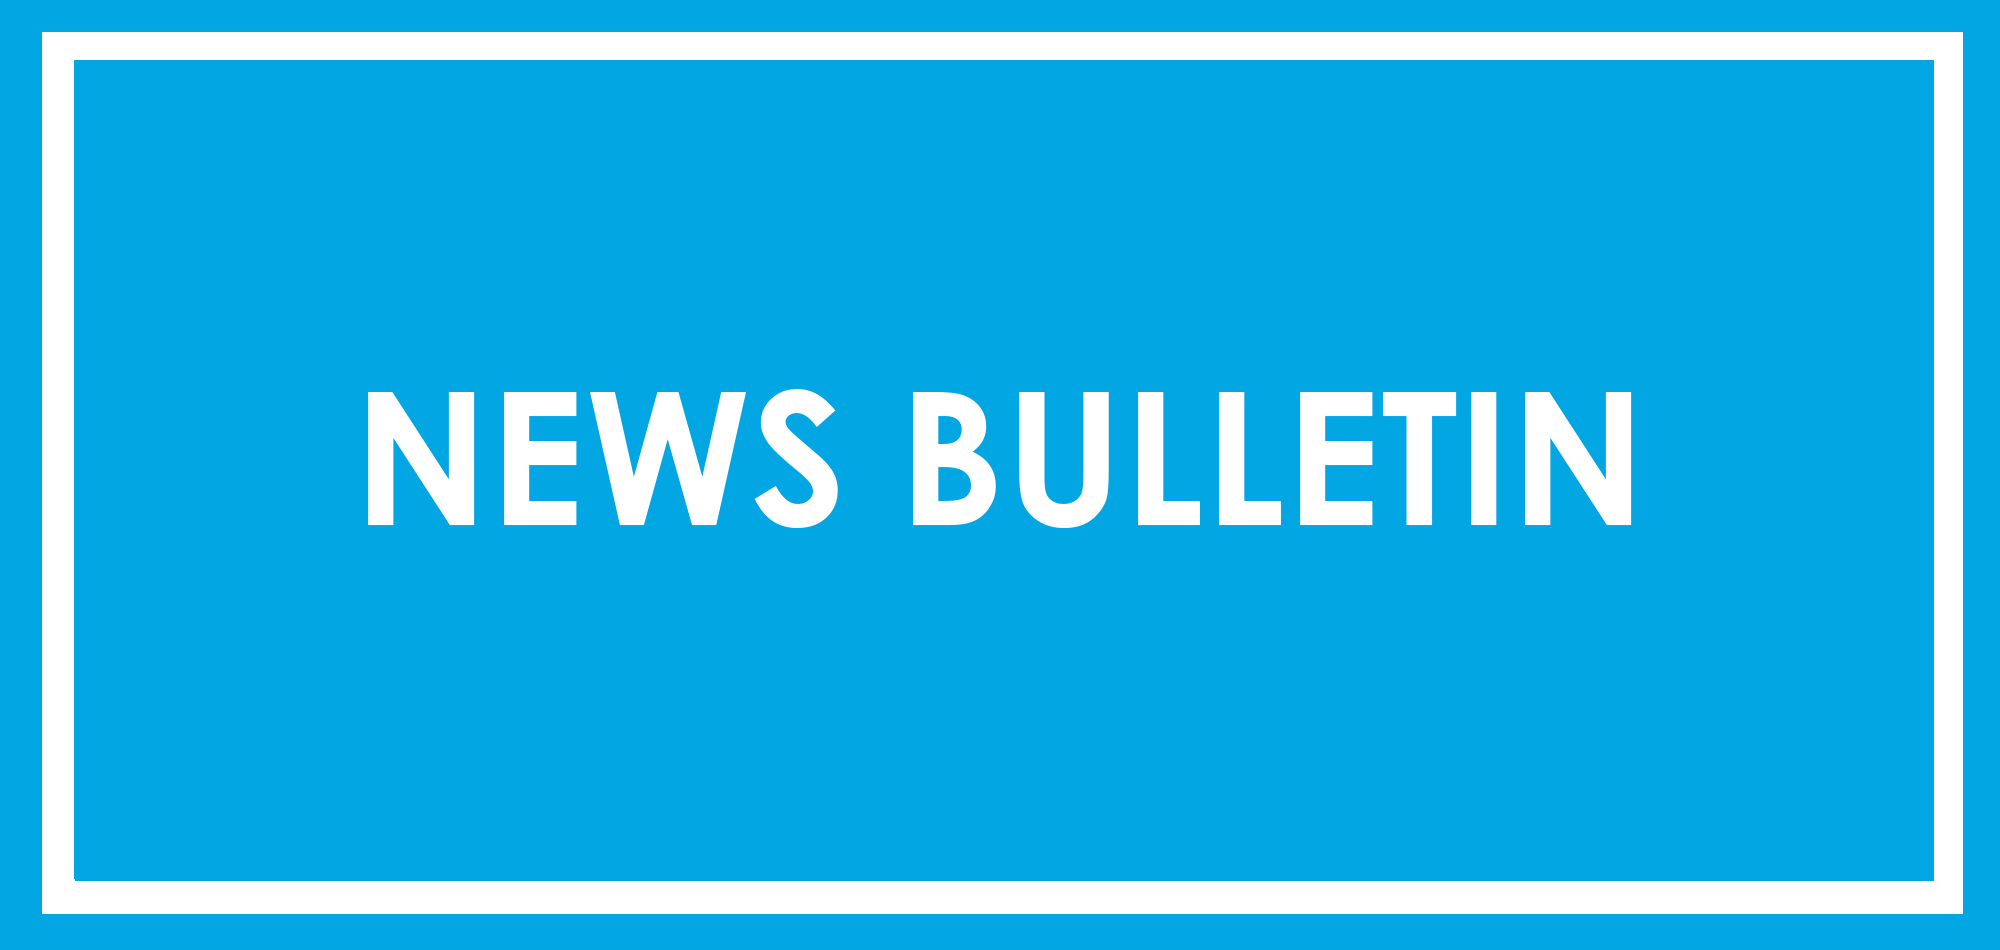 News Bulletin - 21.10.20